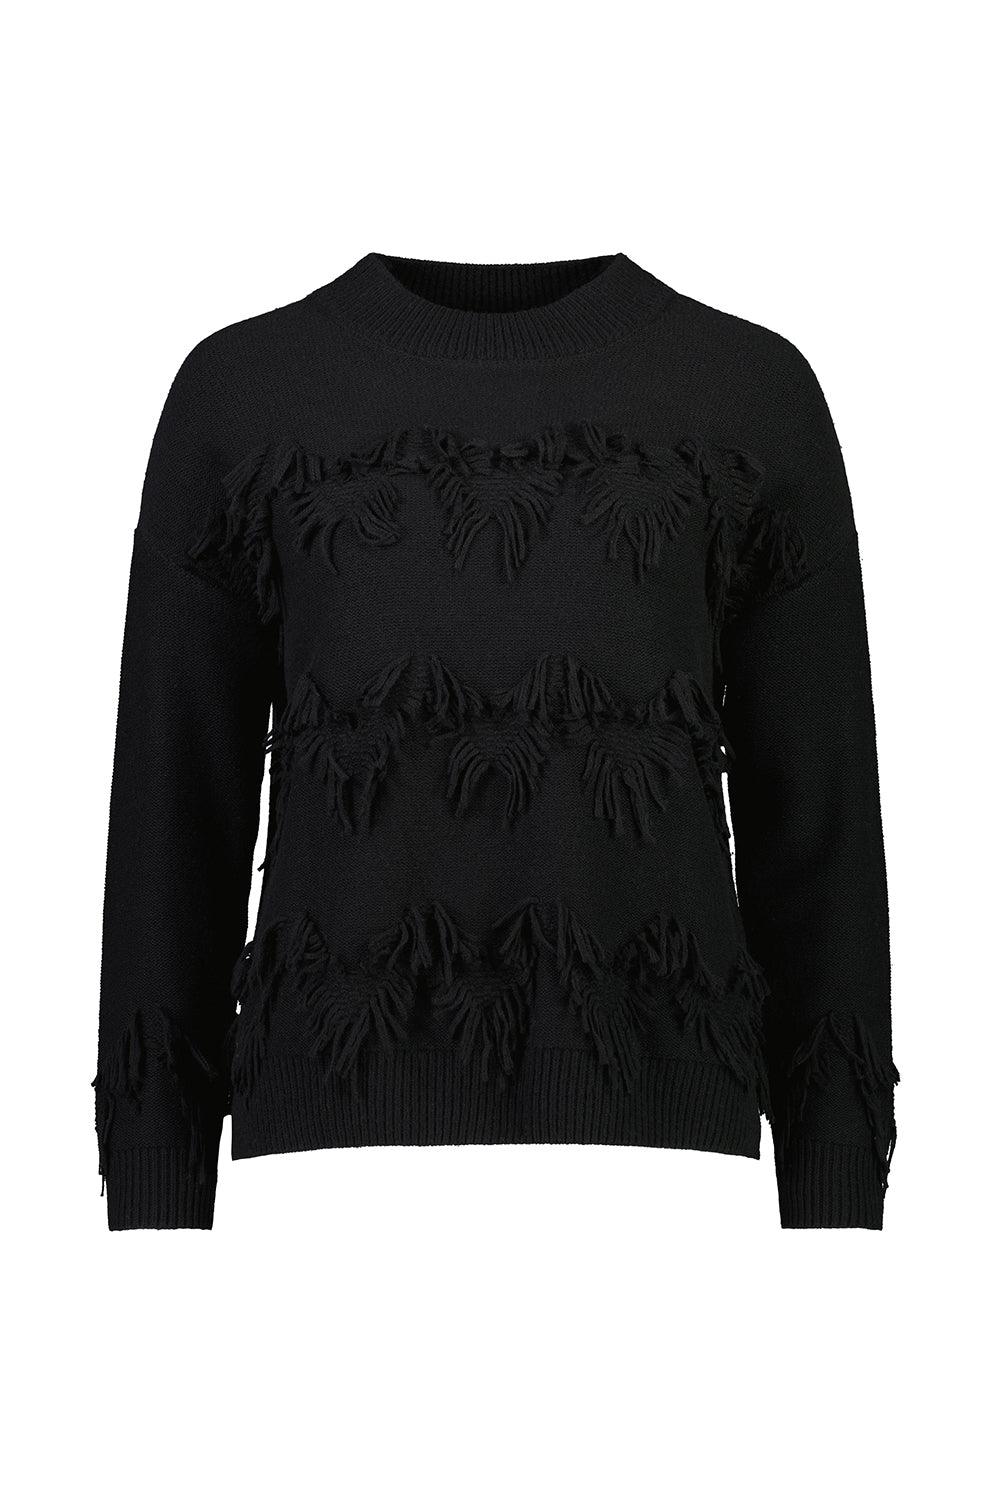 Kick Sweater - Black/Black - Sweater VERGE